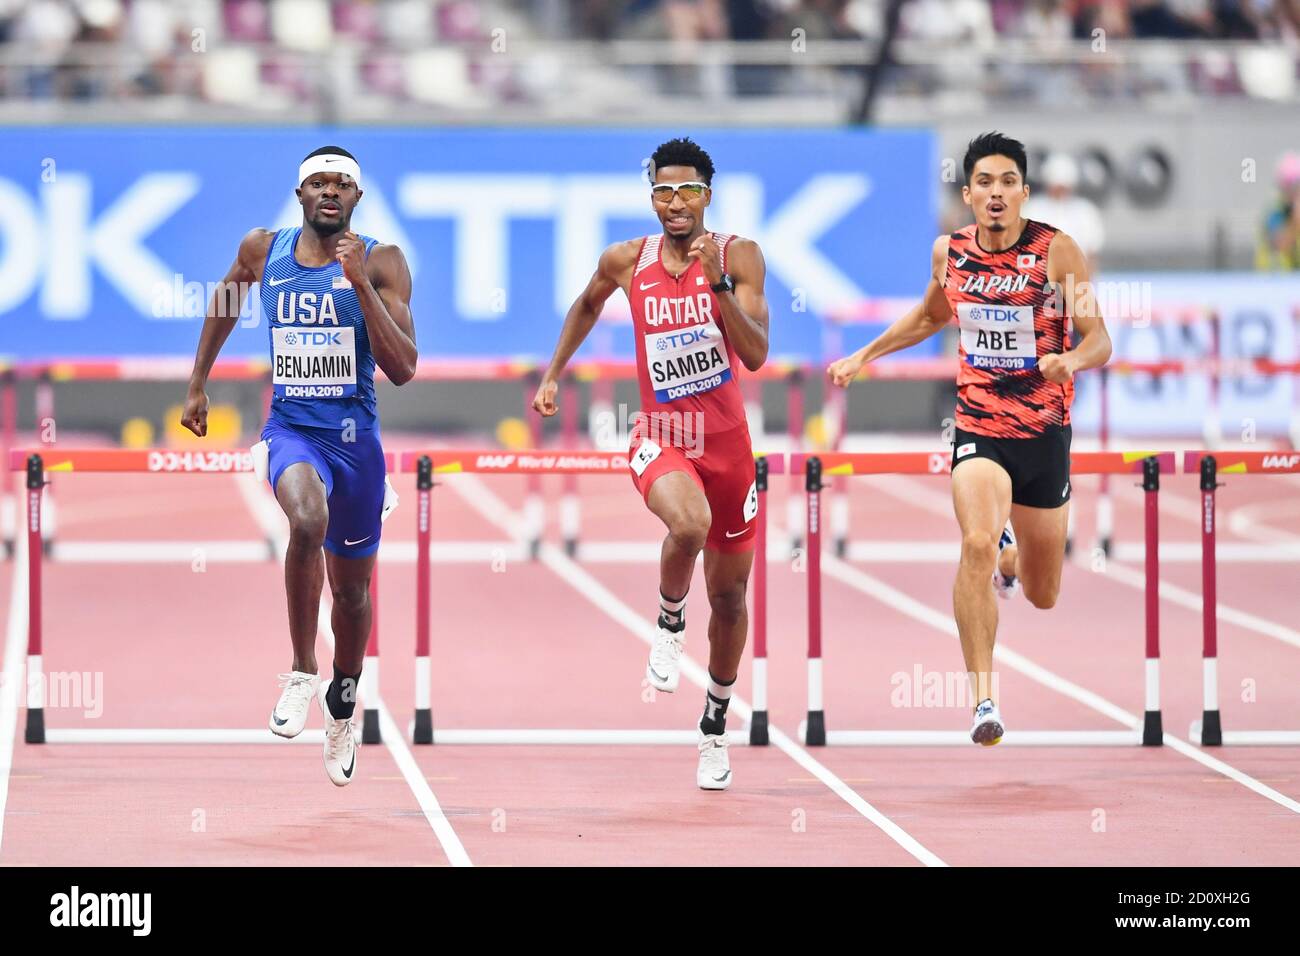 RAI Banjamin (Etats-Unis), Abderrahman Samba (QAT) Takatoshi Abe (JPN). 400 mètres haies semi-inal. Championnats du monde d'athlétisme, Doha 2019 Banque D'Images